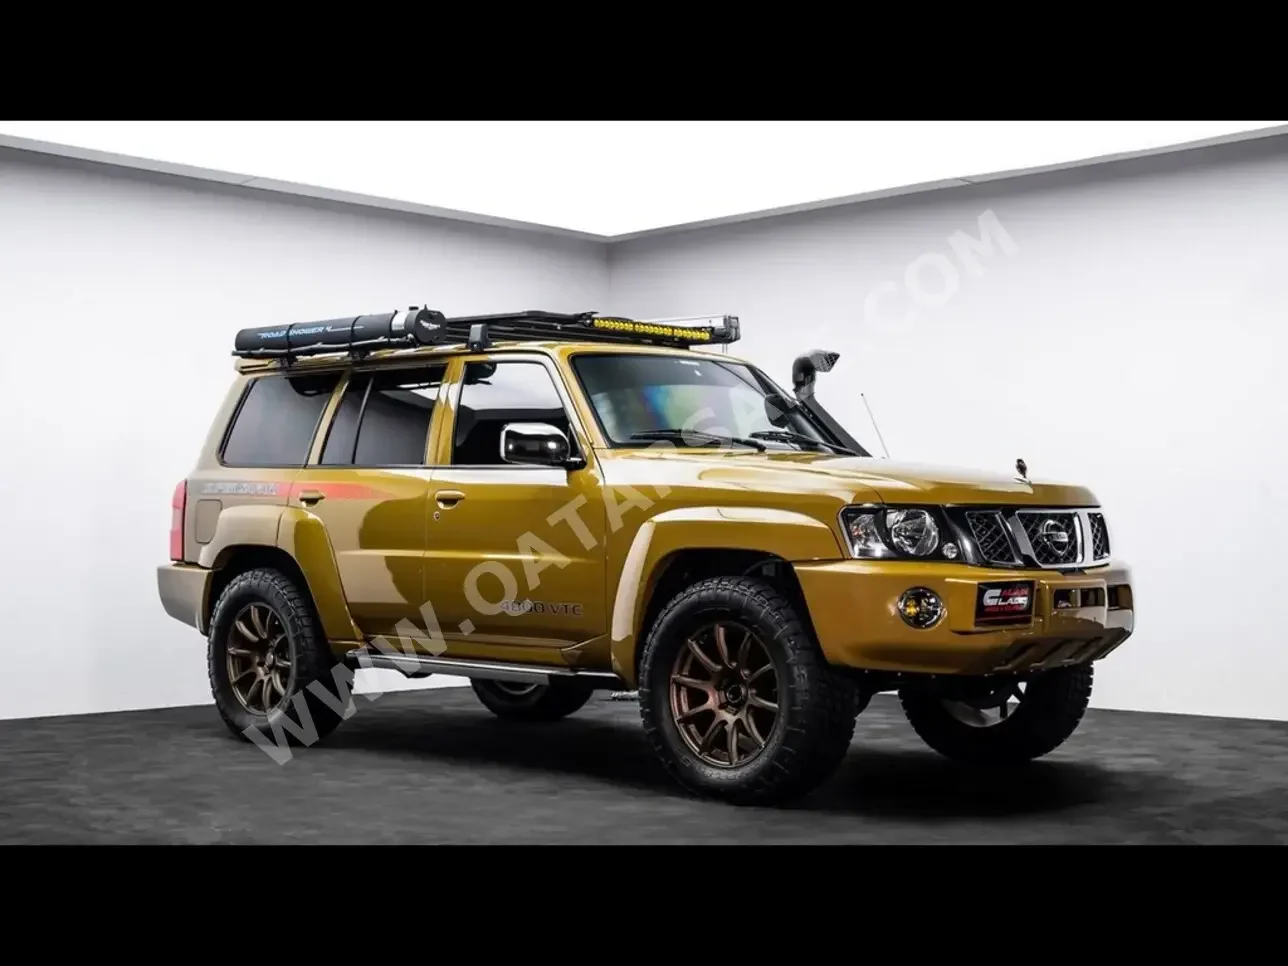 Nissan  Patrol  Super Safari  2016  Automatic  587 Km  6 Cylinder  Four Wheel Drive (4WD)  SUV  Brown